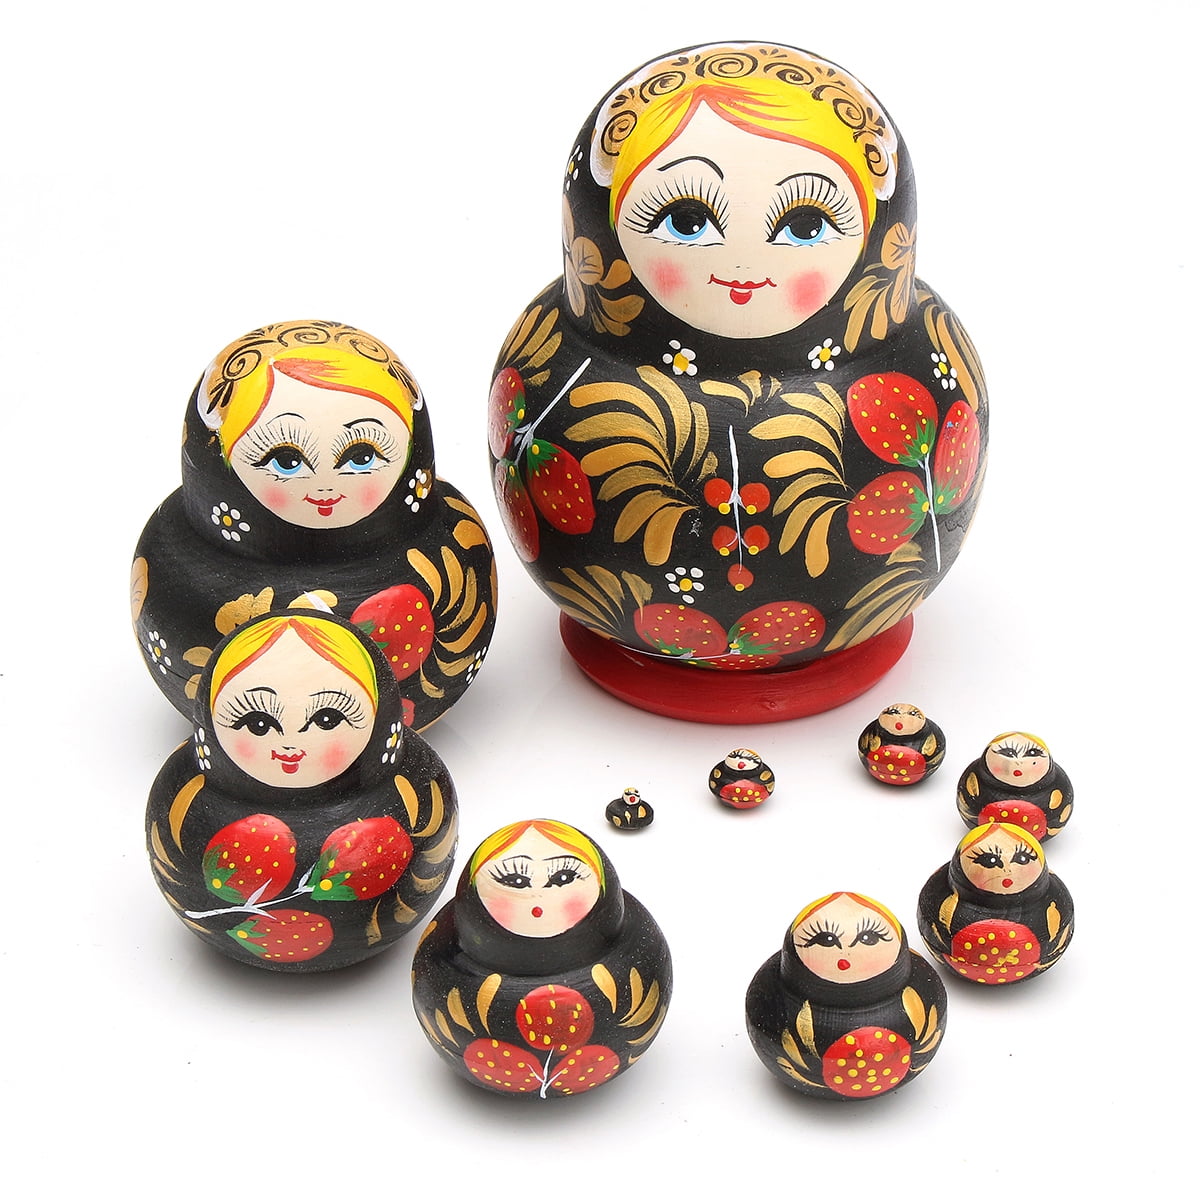 5 Munecas Rusas De Madera Decoracion Hogarena Russian Nesting Dolls for Kids 5 pcs Wooden Matryoshka Stacking Toys Shelf Accent Baboushka Nesting Dolls